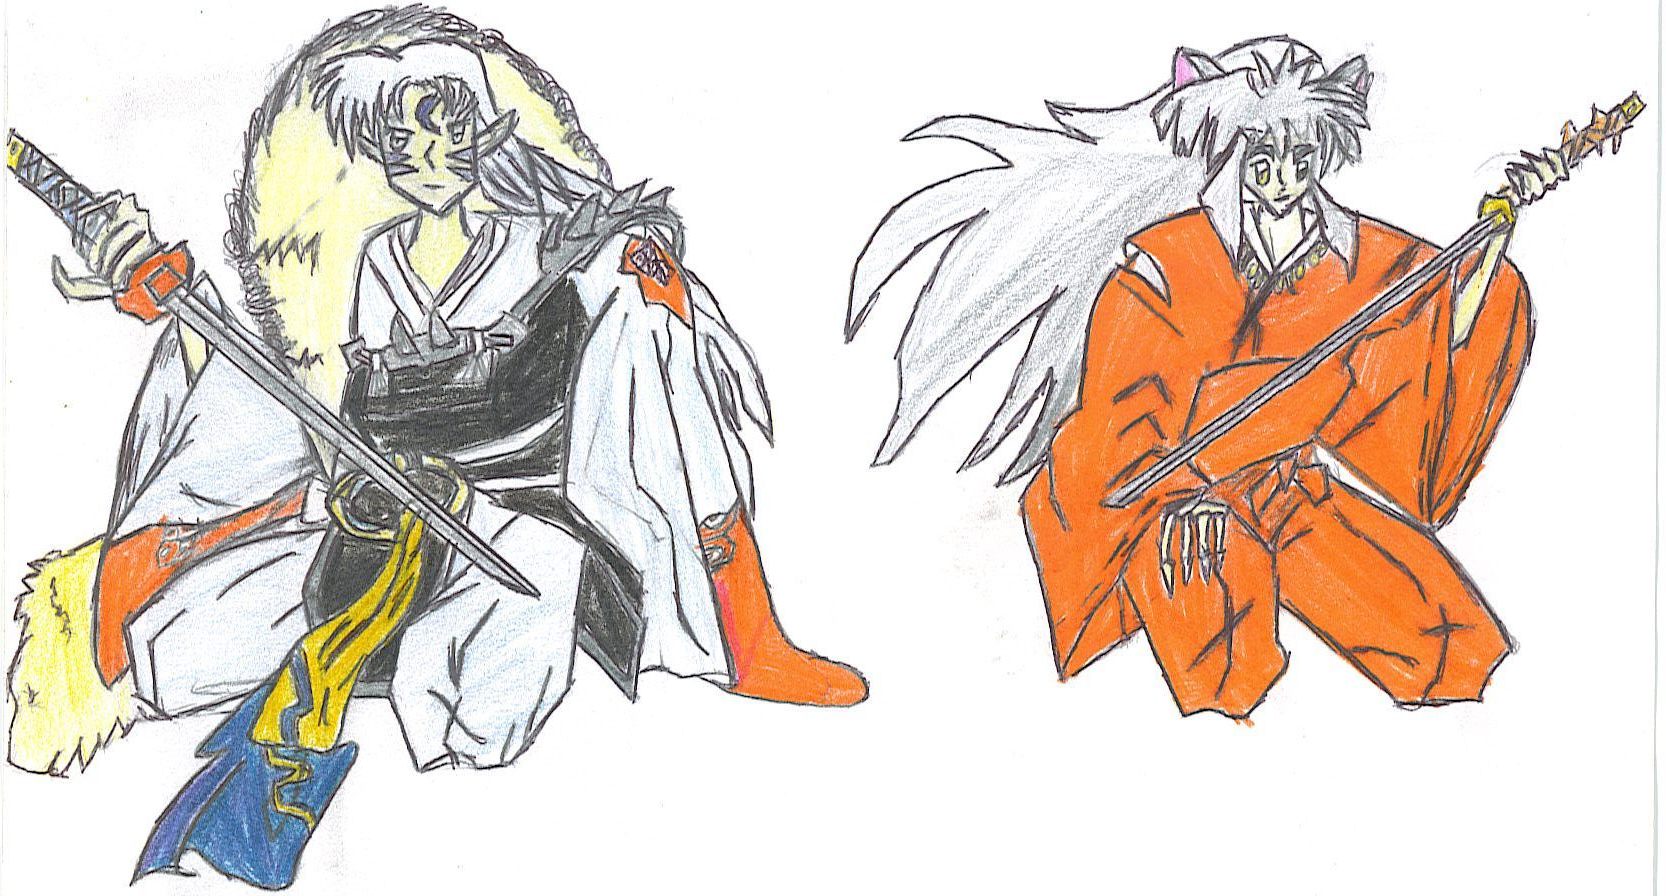 Inuyasha and Sesshomaru by Demons_fire06